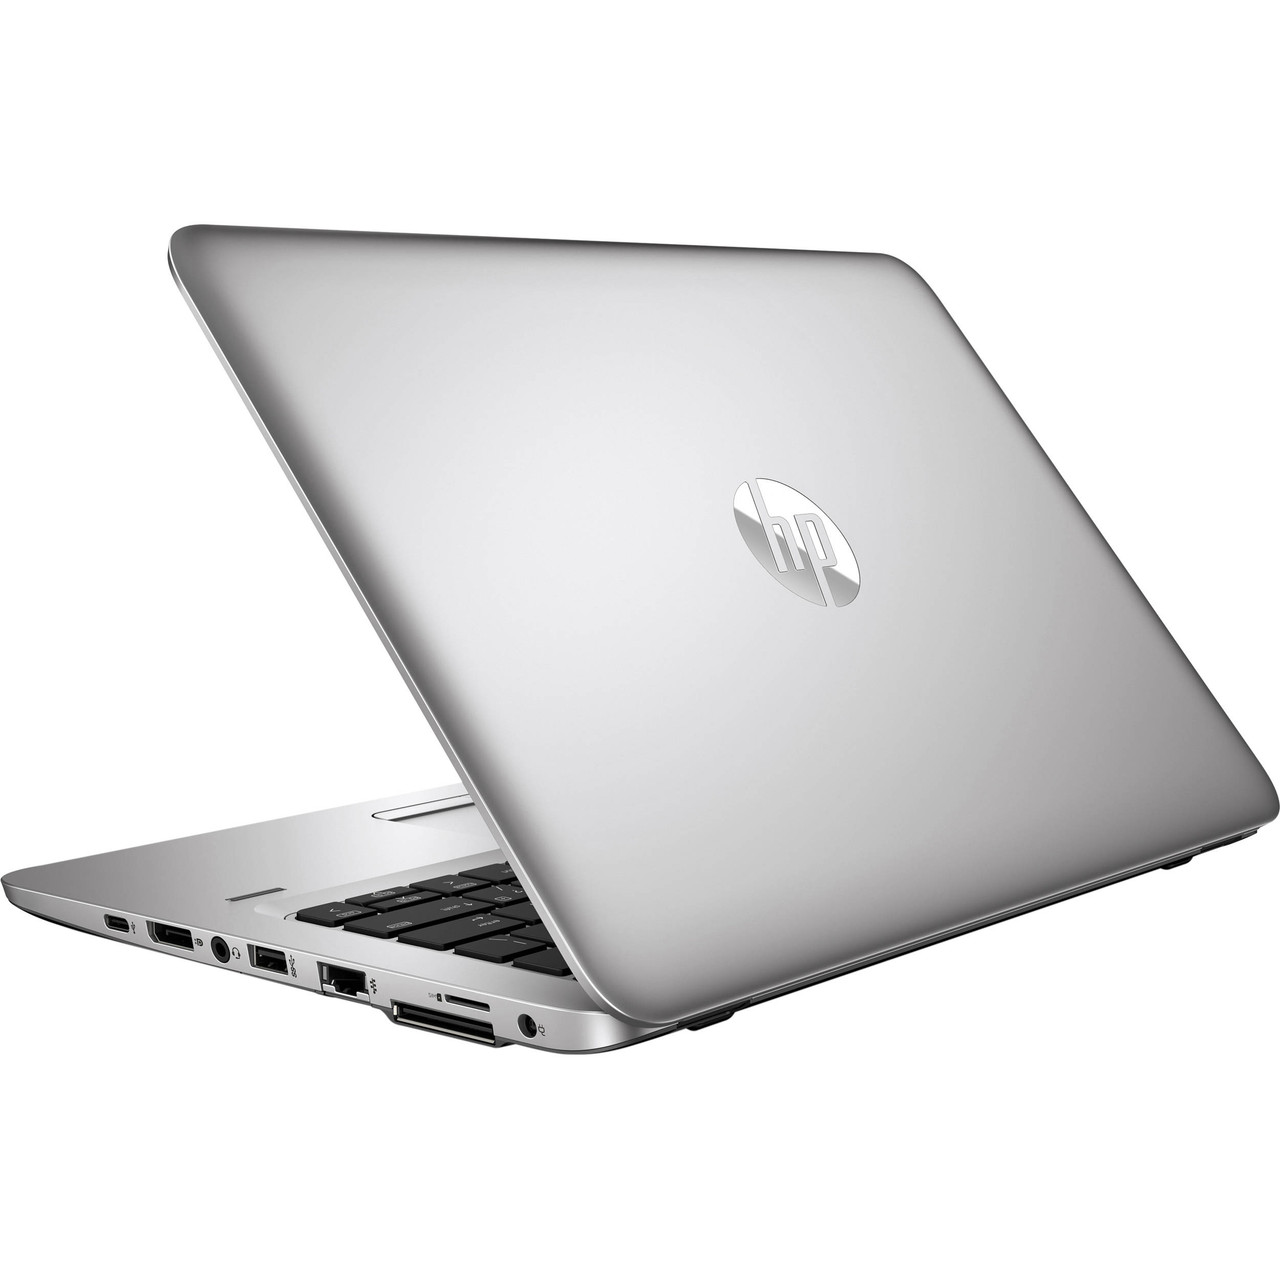 HP Elitebook 820 G3 12.5" Laptop Intel Core i7 2.60 GHz 8GB 180GB SSD W10P | Refurbished